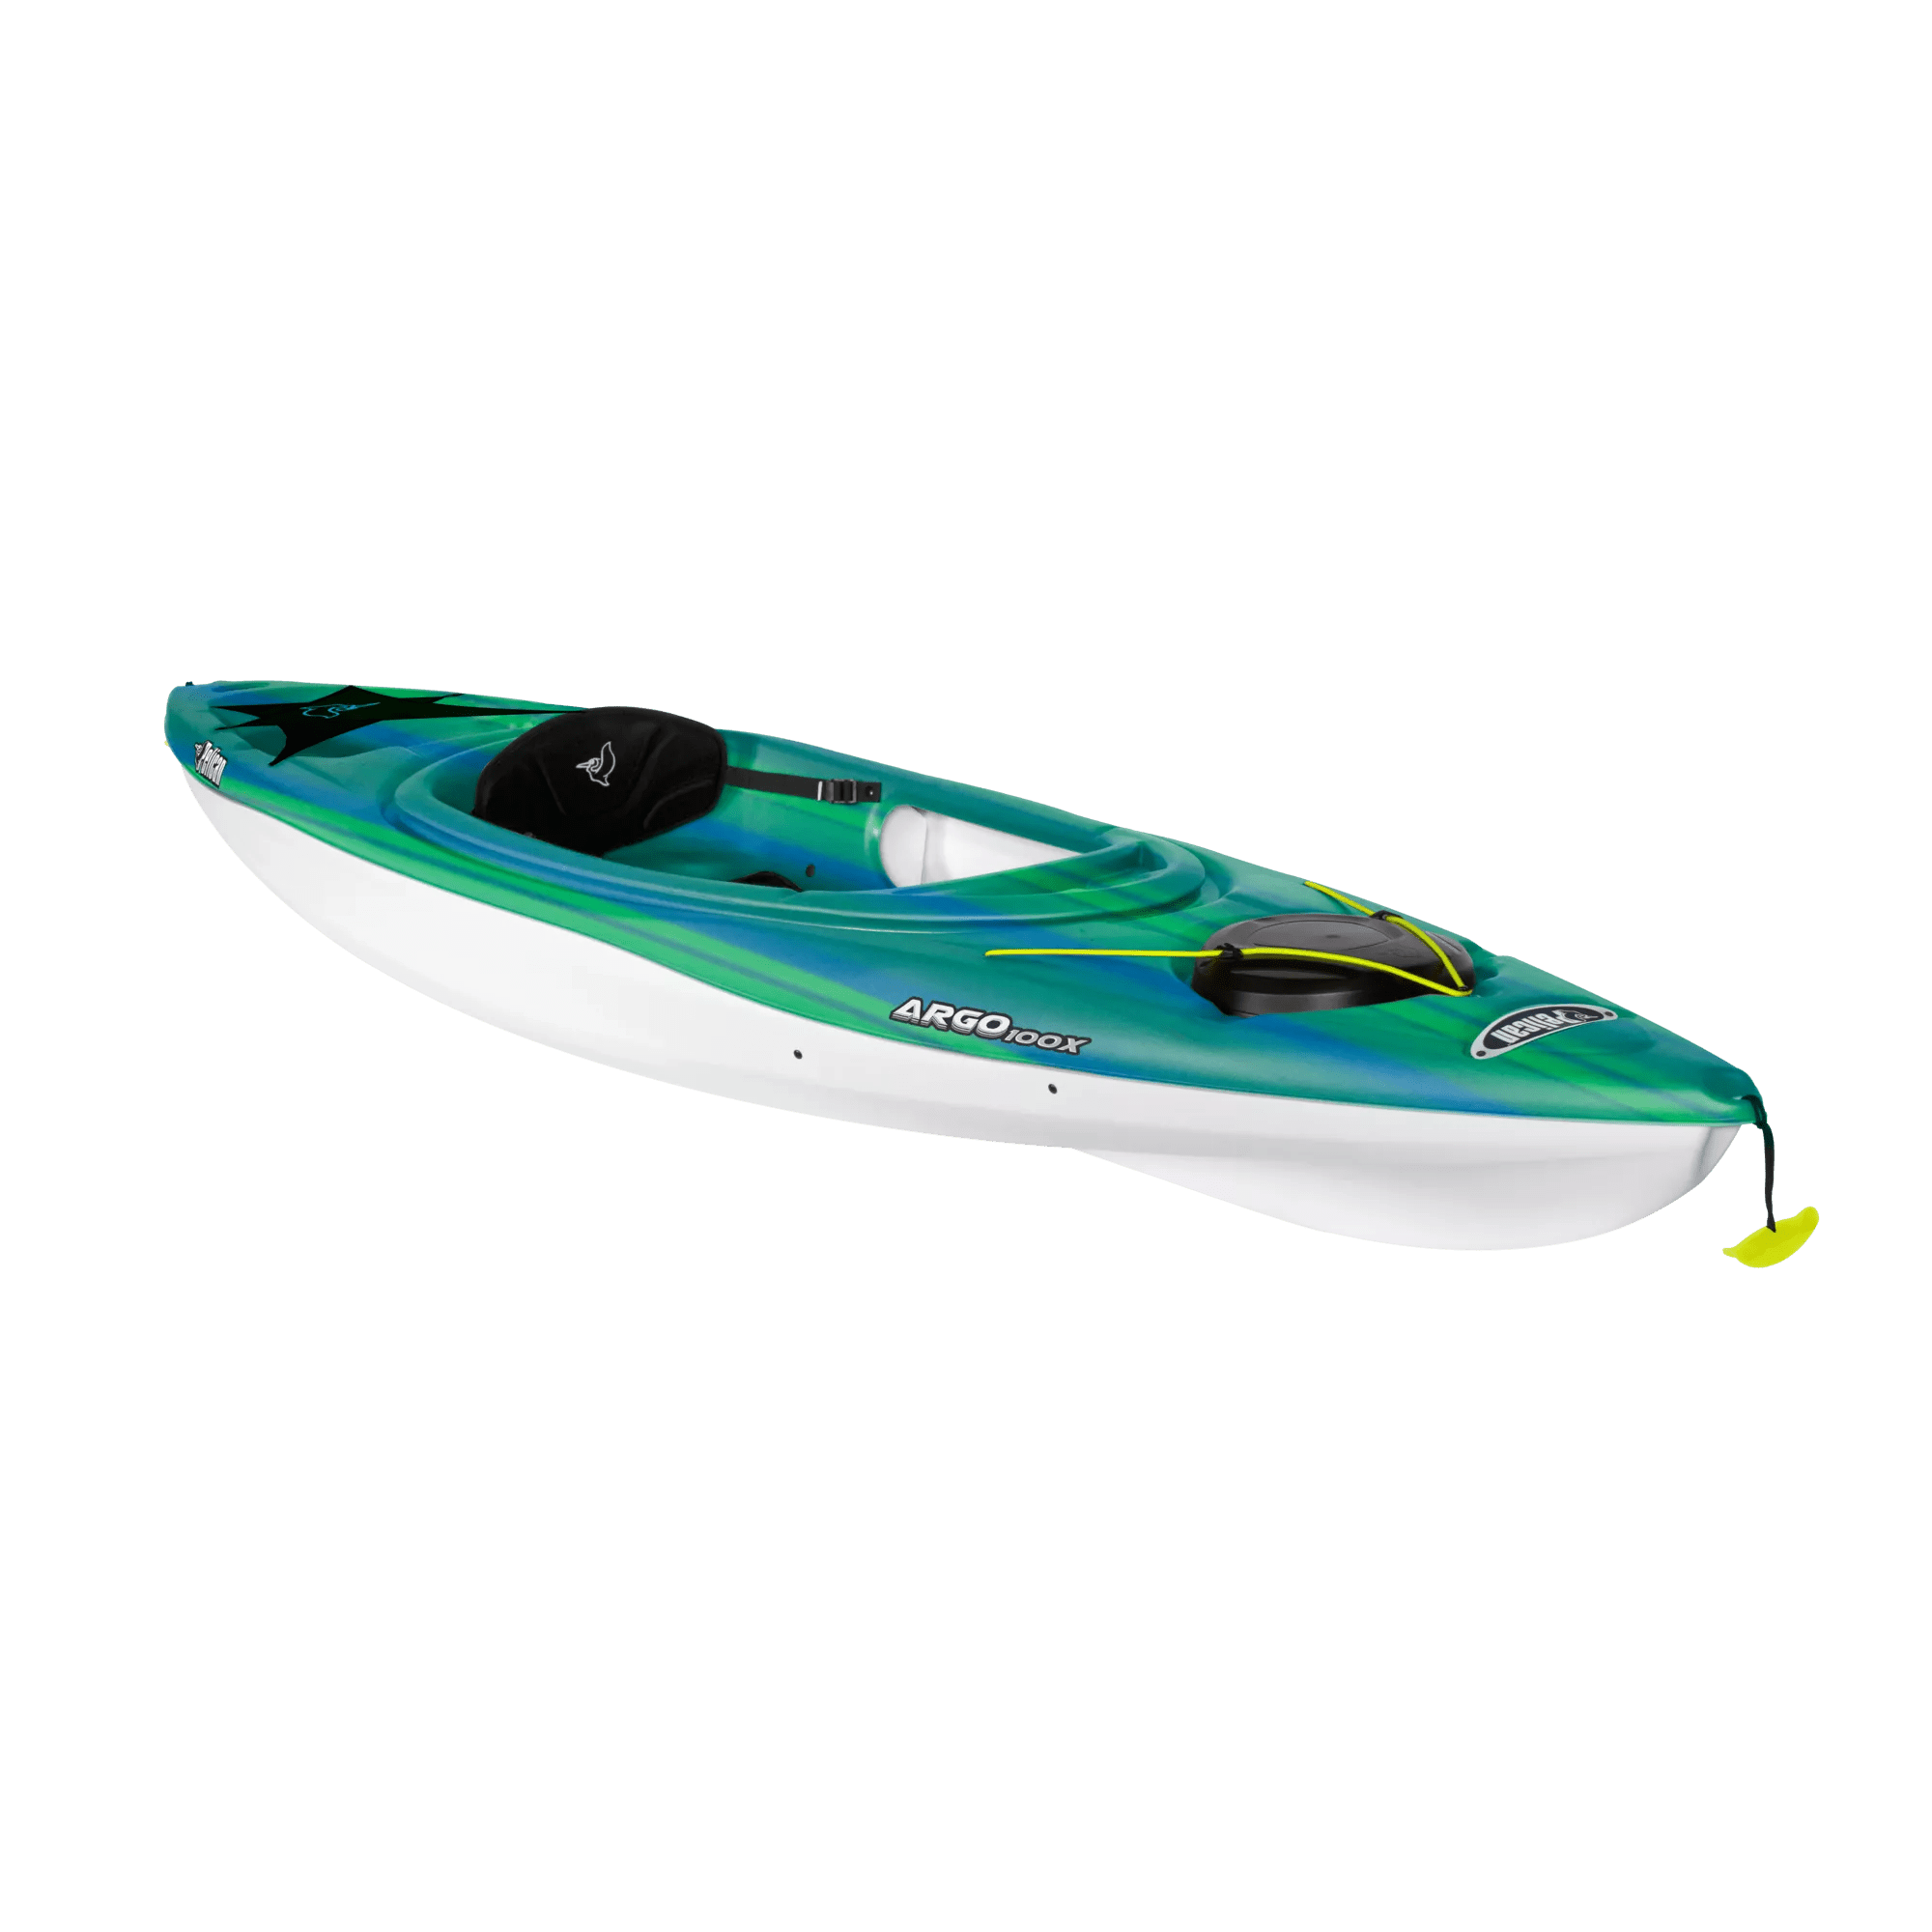 PELICAN - Argo 100X Sit-In Kayak - Discontinued color/model - Blue - KFF10P103-00 - ISO 